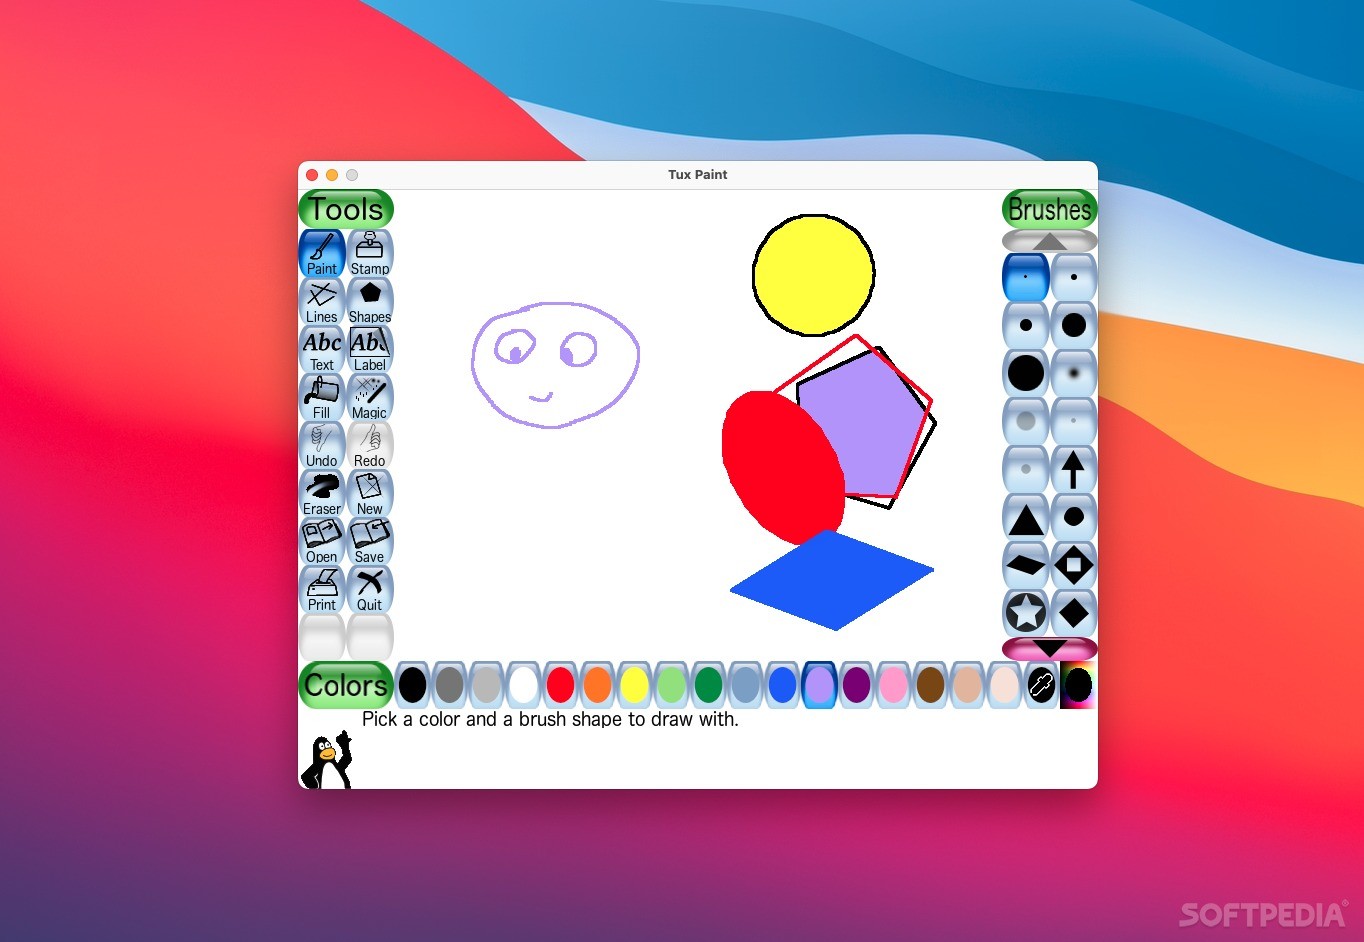 Download Tux Paint (Mac) – Download & Review Free